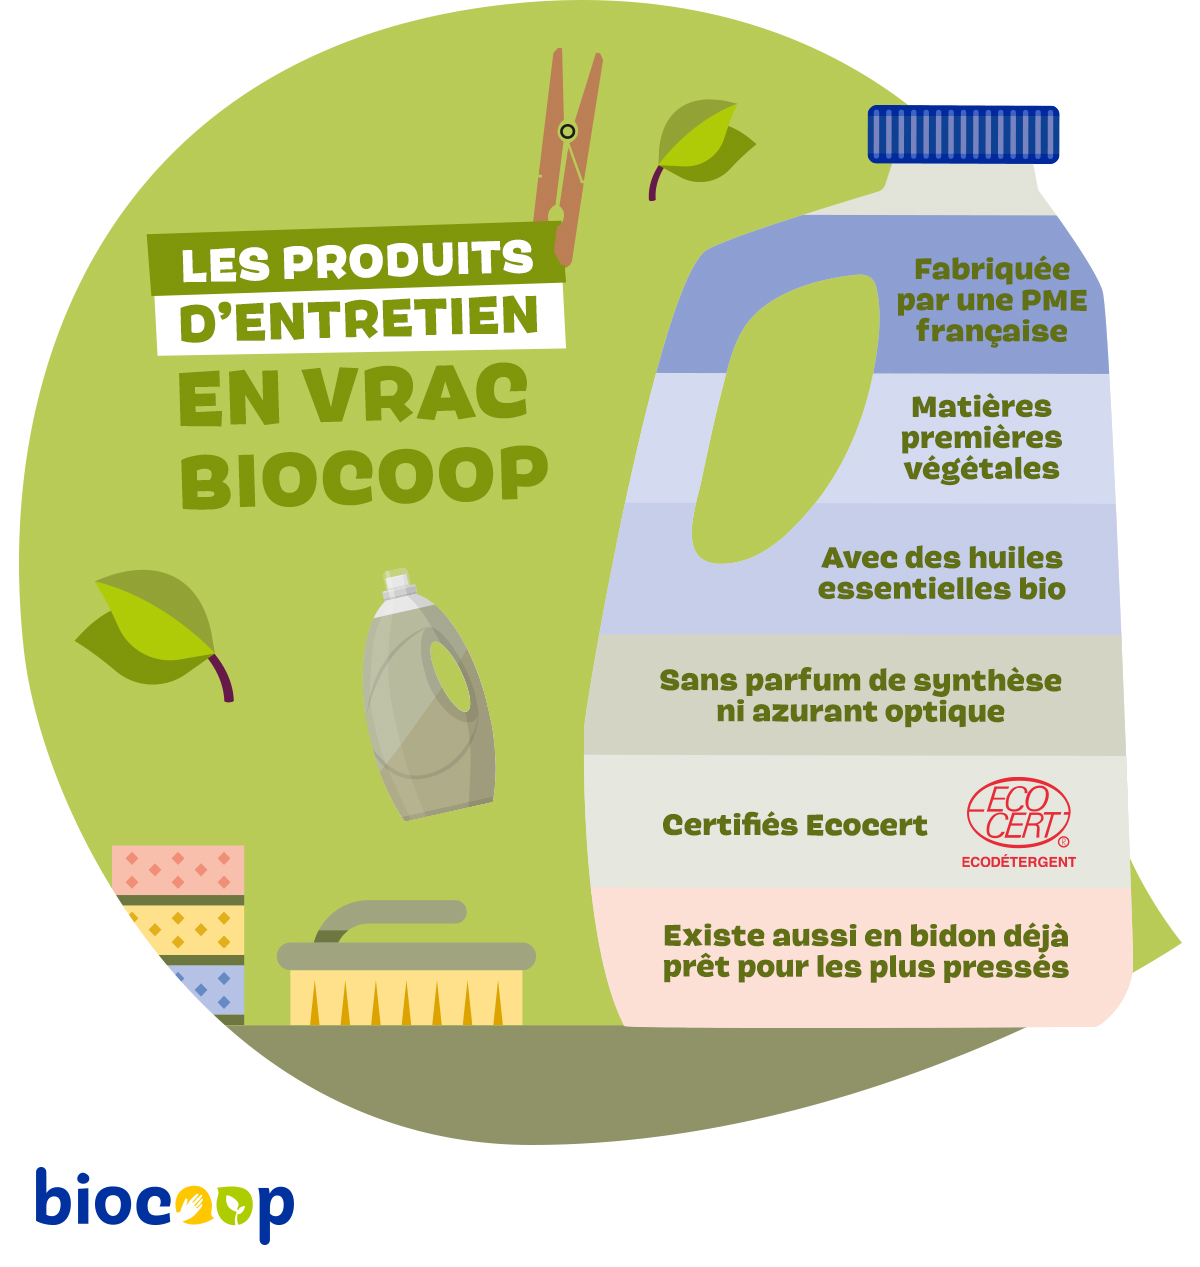 Les produits d’entretien Biocoop